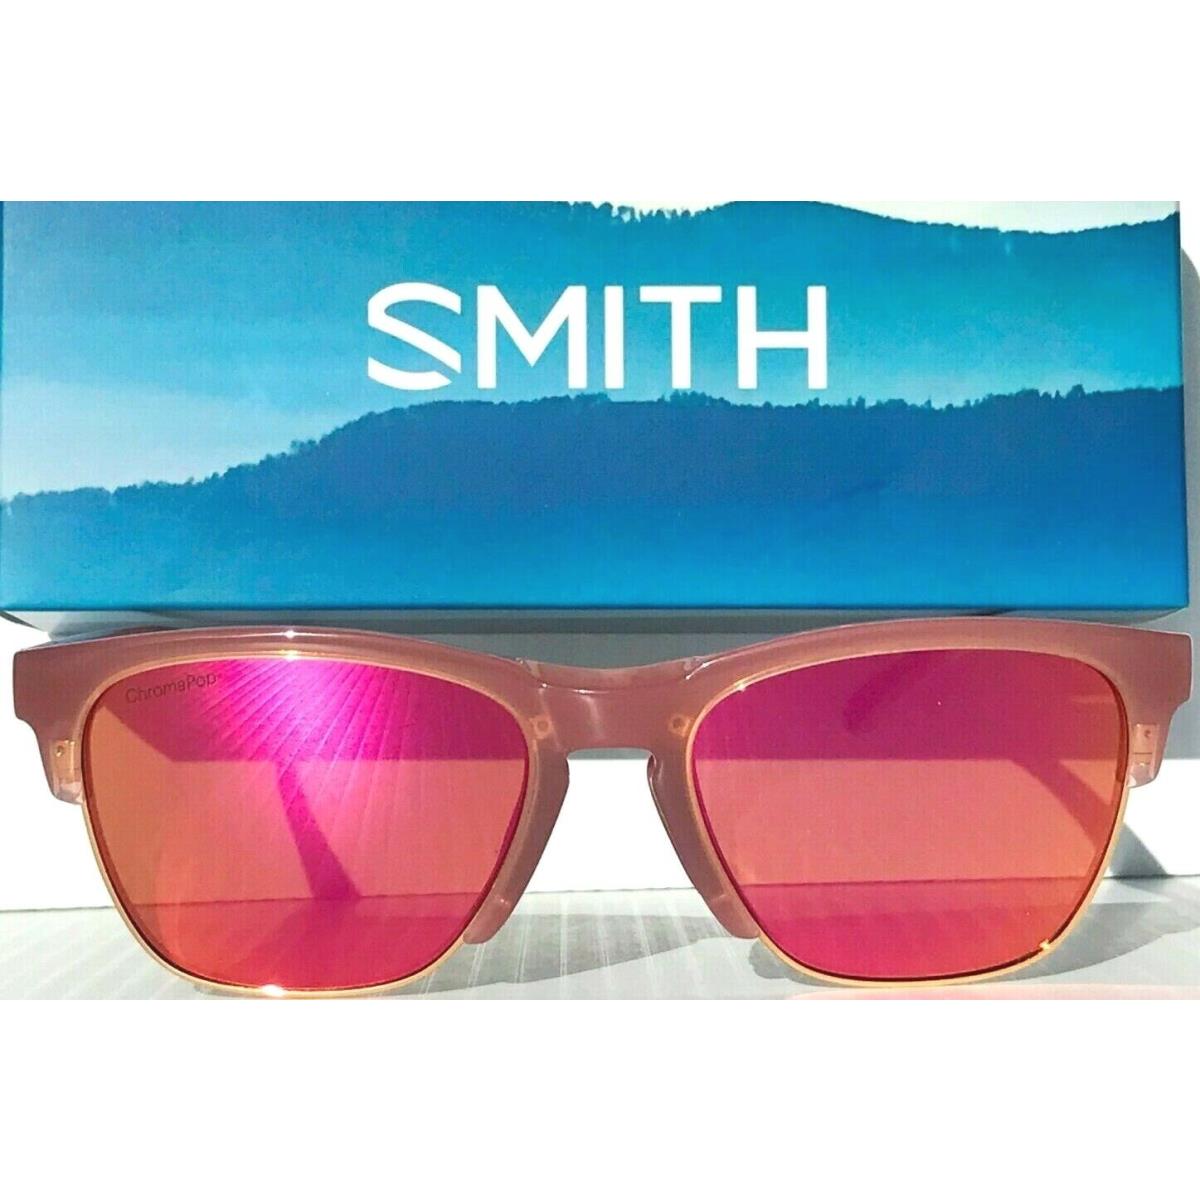 Smith Optics Haywire Pink Beige Polarized Rose Gold Chromapop Sunglasses - Smith  Optics sunglasses 